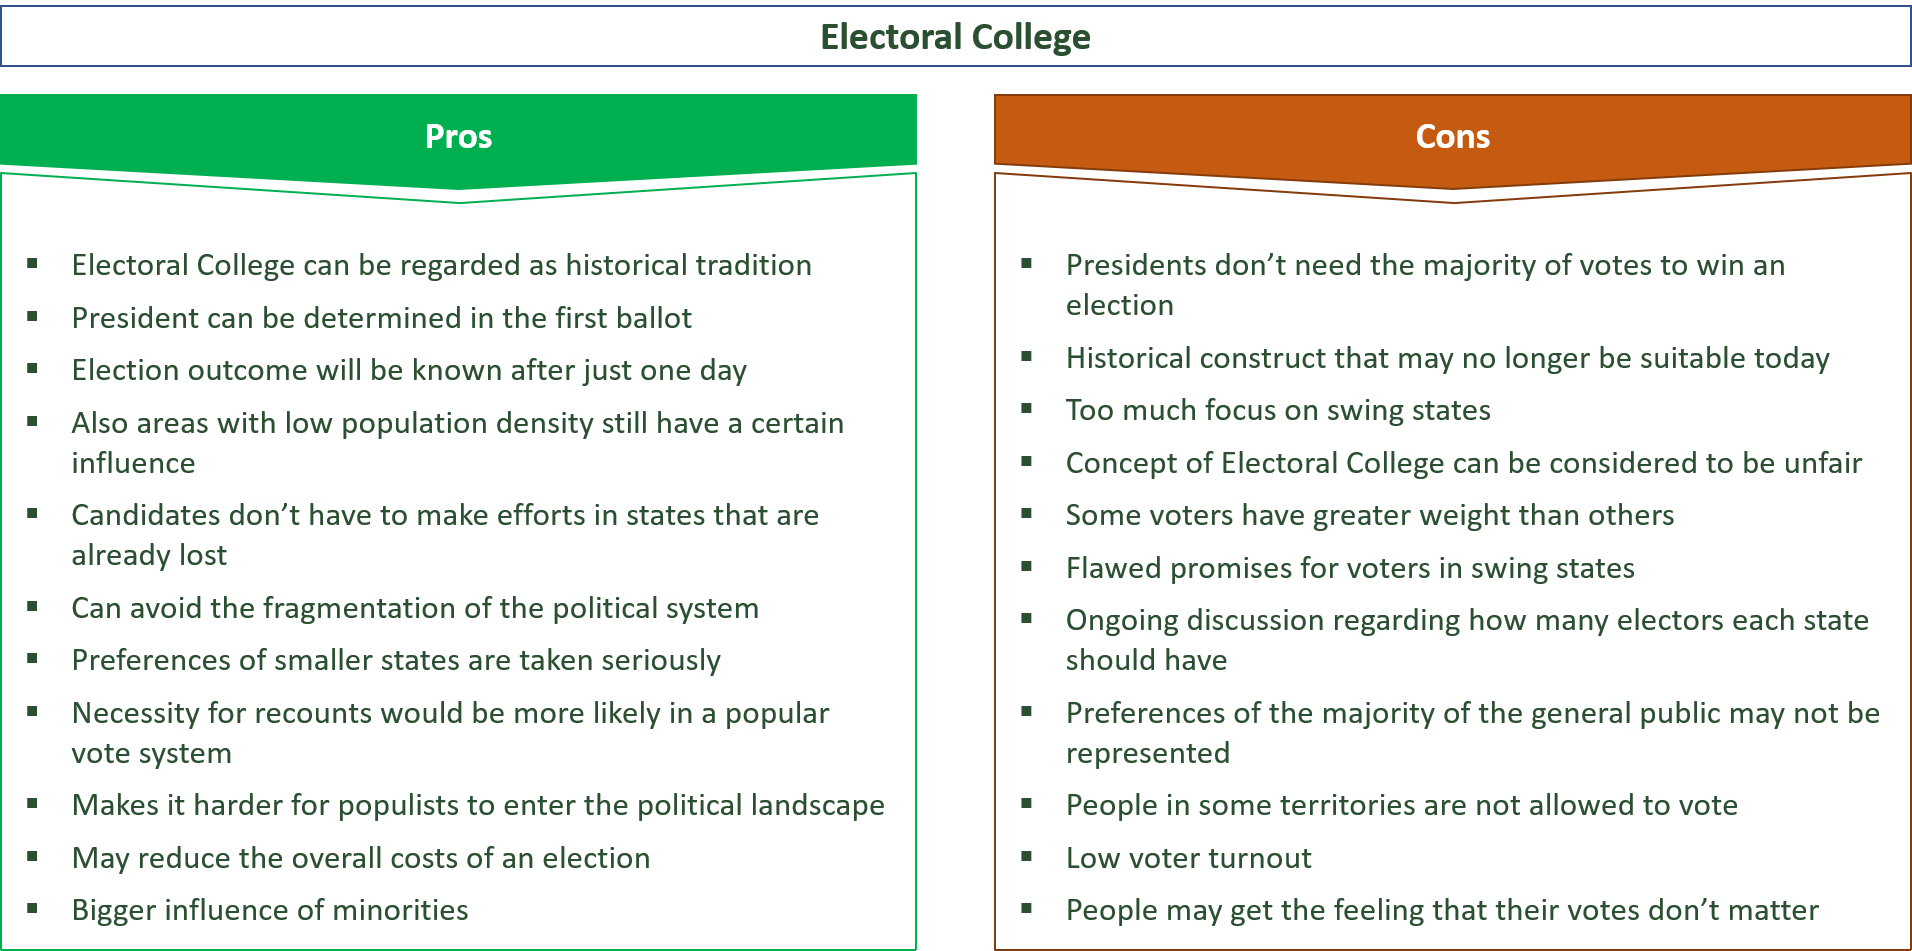 advantages and disadvantages of electoral college vs. popular vote